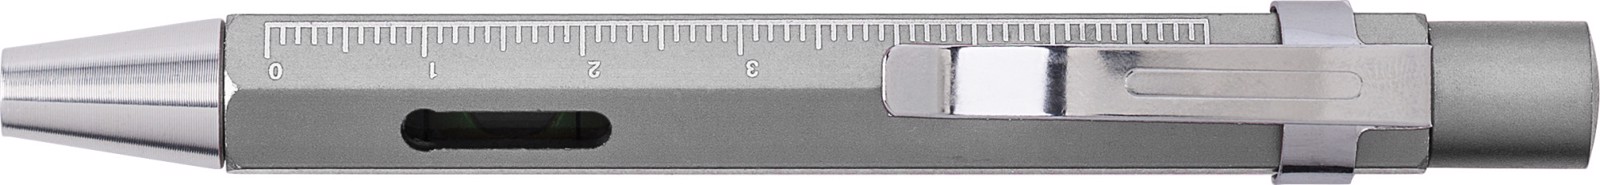 Aluminium 3-in-1 screwdriver - Silver